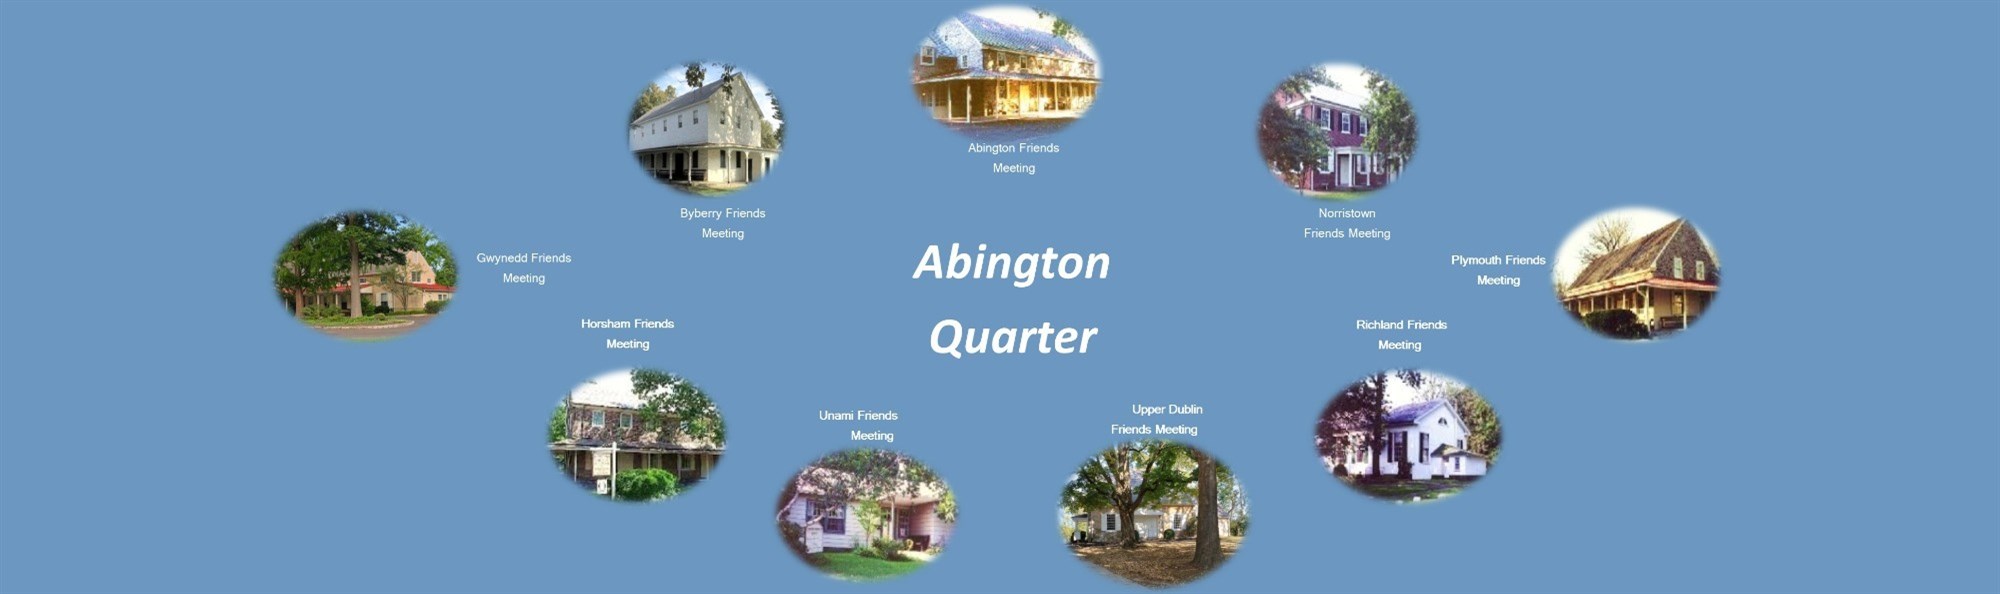 Meetings of Abington Quarter